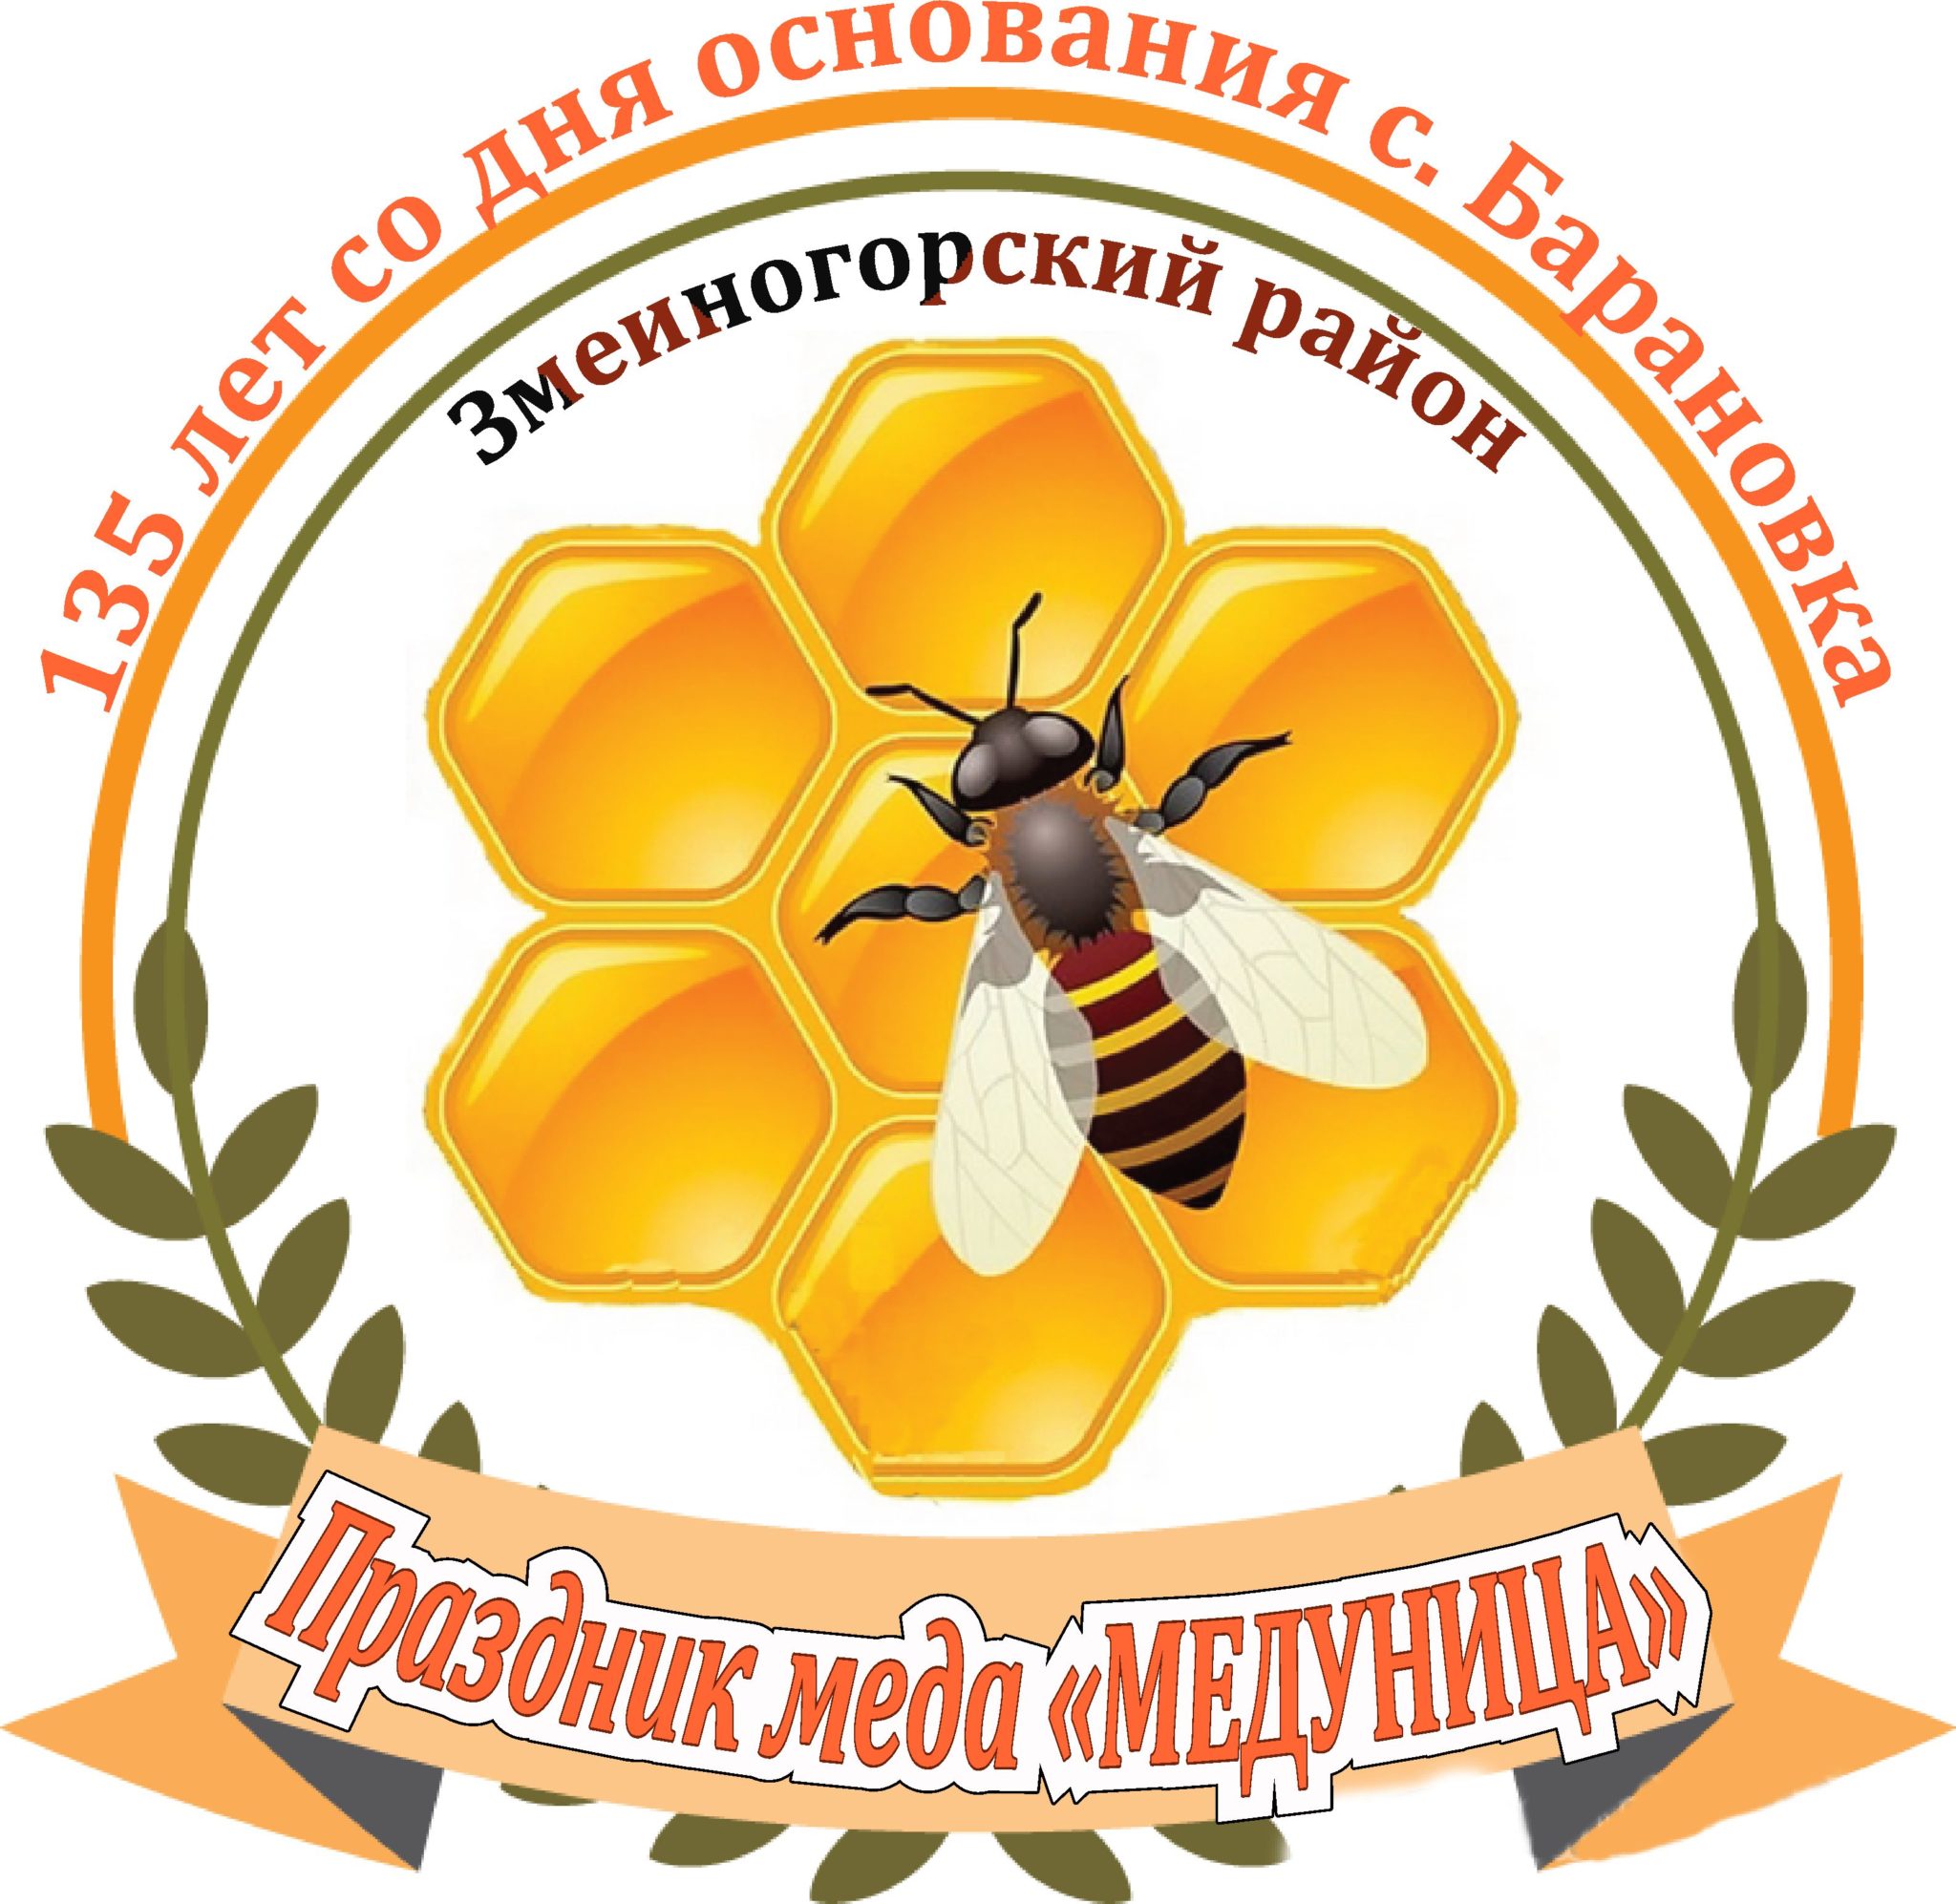 Мед логотип